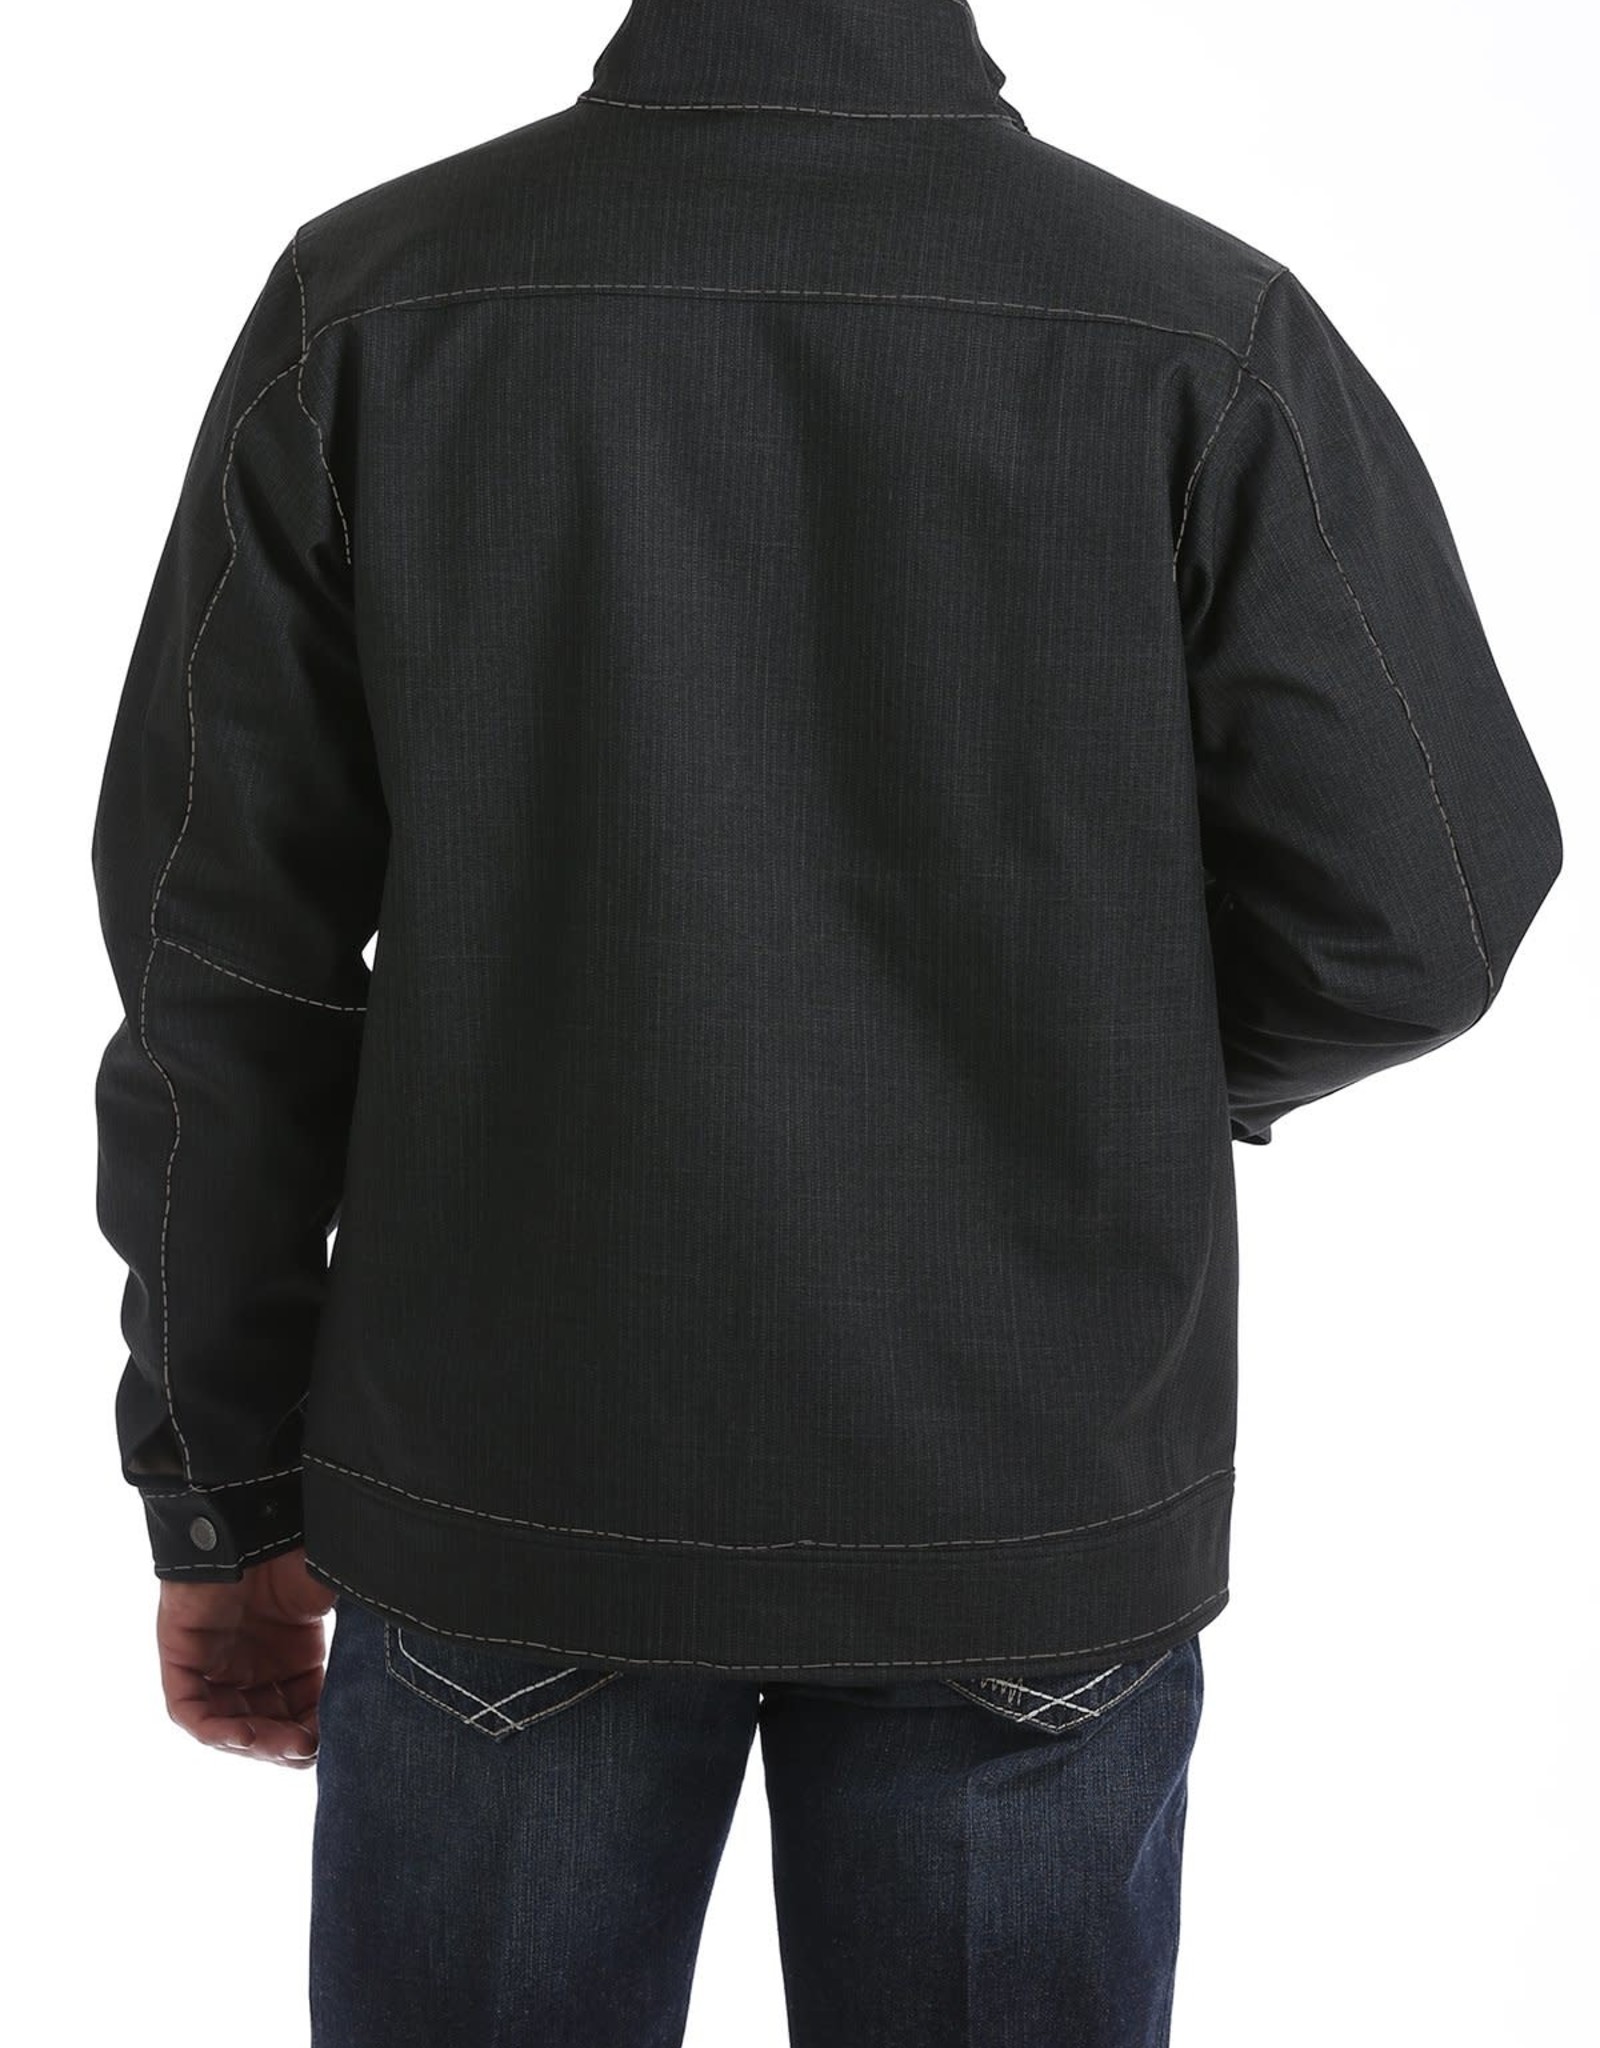 Cinch Mens Cinch Charcoal Bonded Texture Jacket